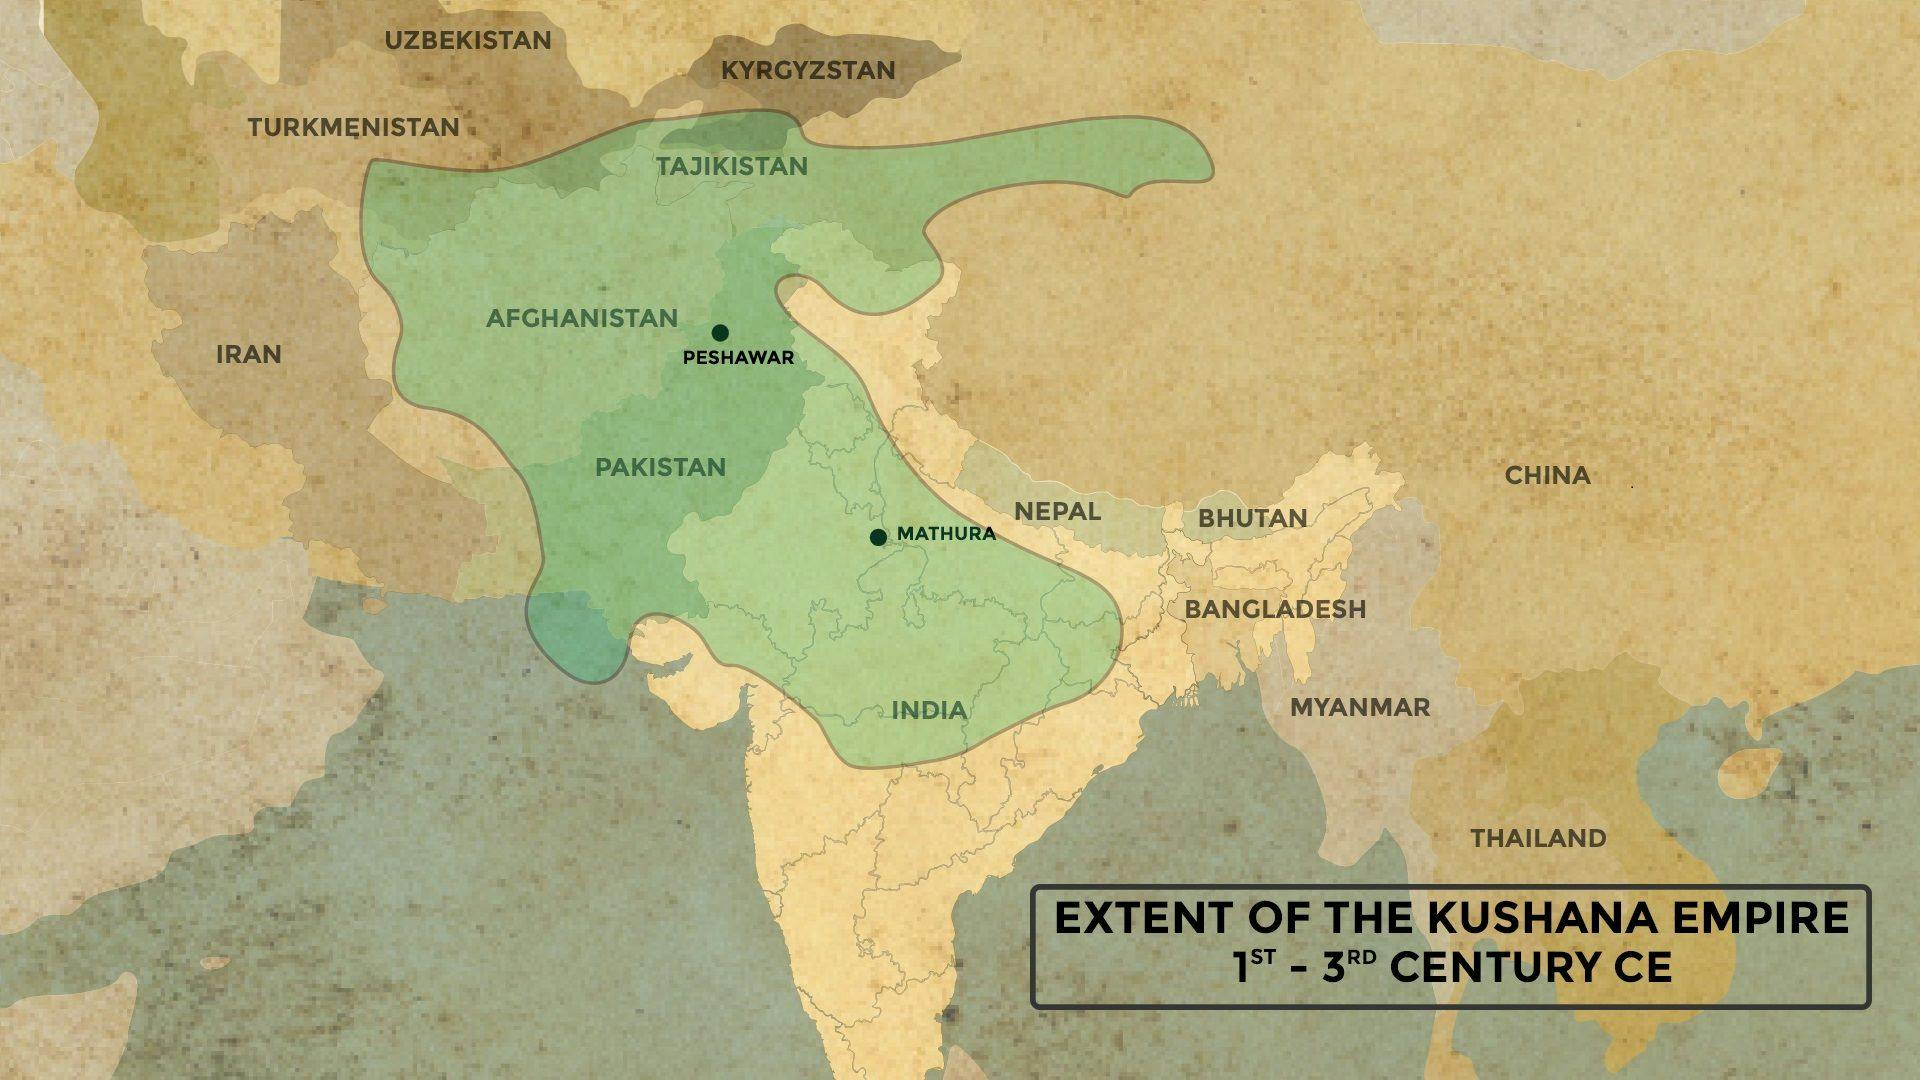 Maximum extent of the Kushana Empire